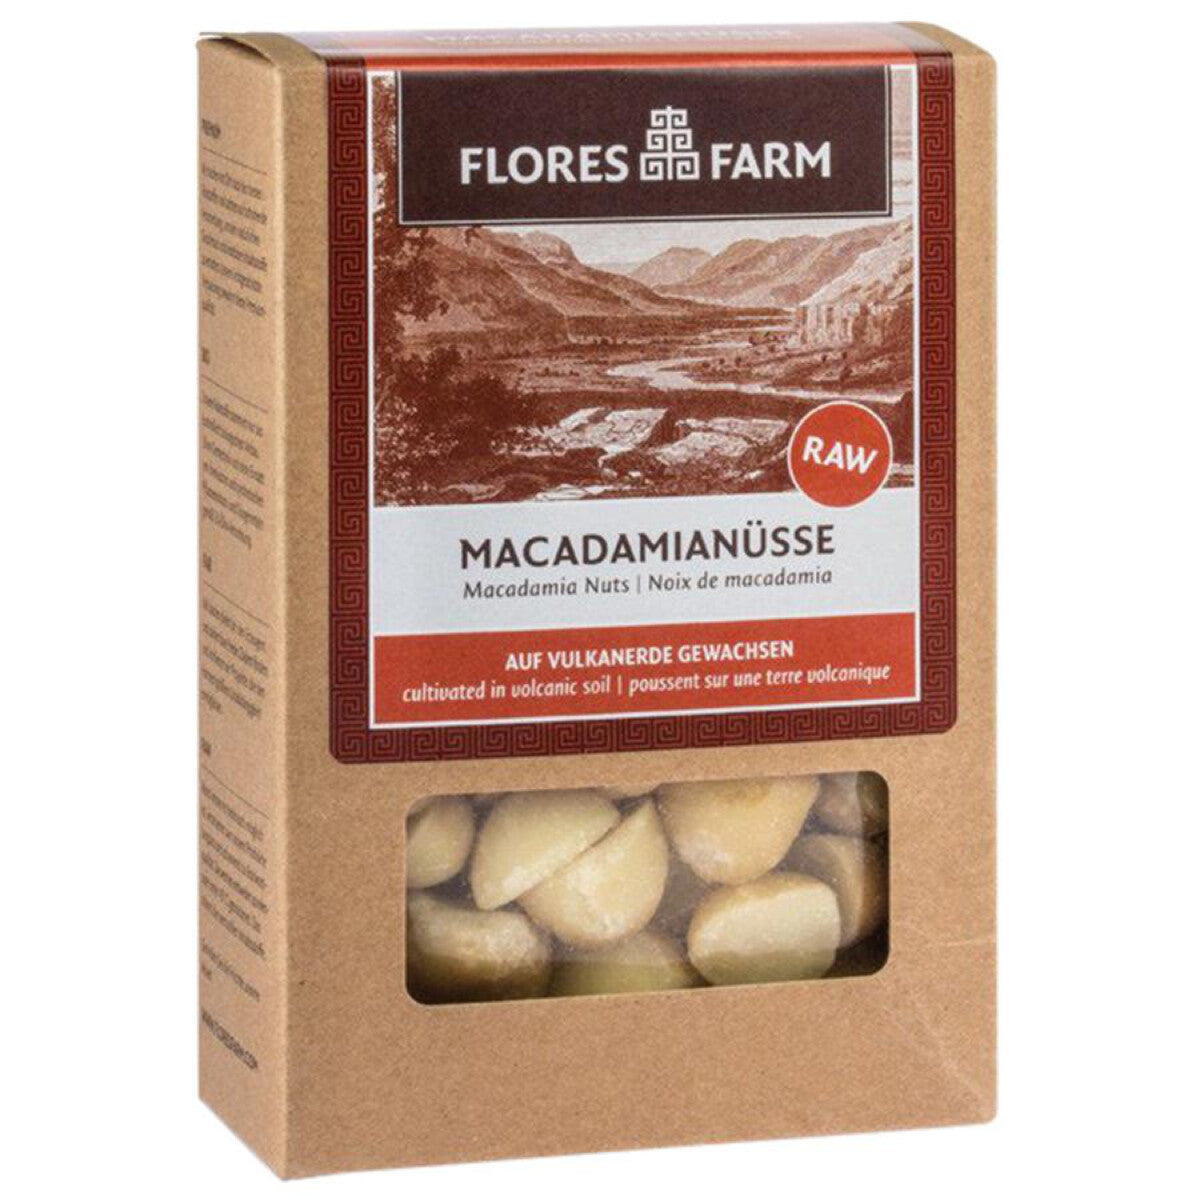 FLORES FARM Macadamianüsse – 75 g